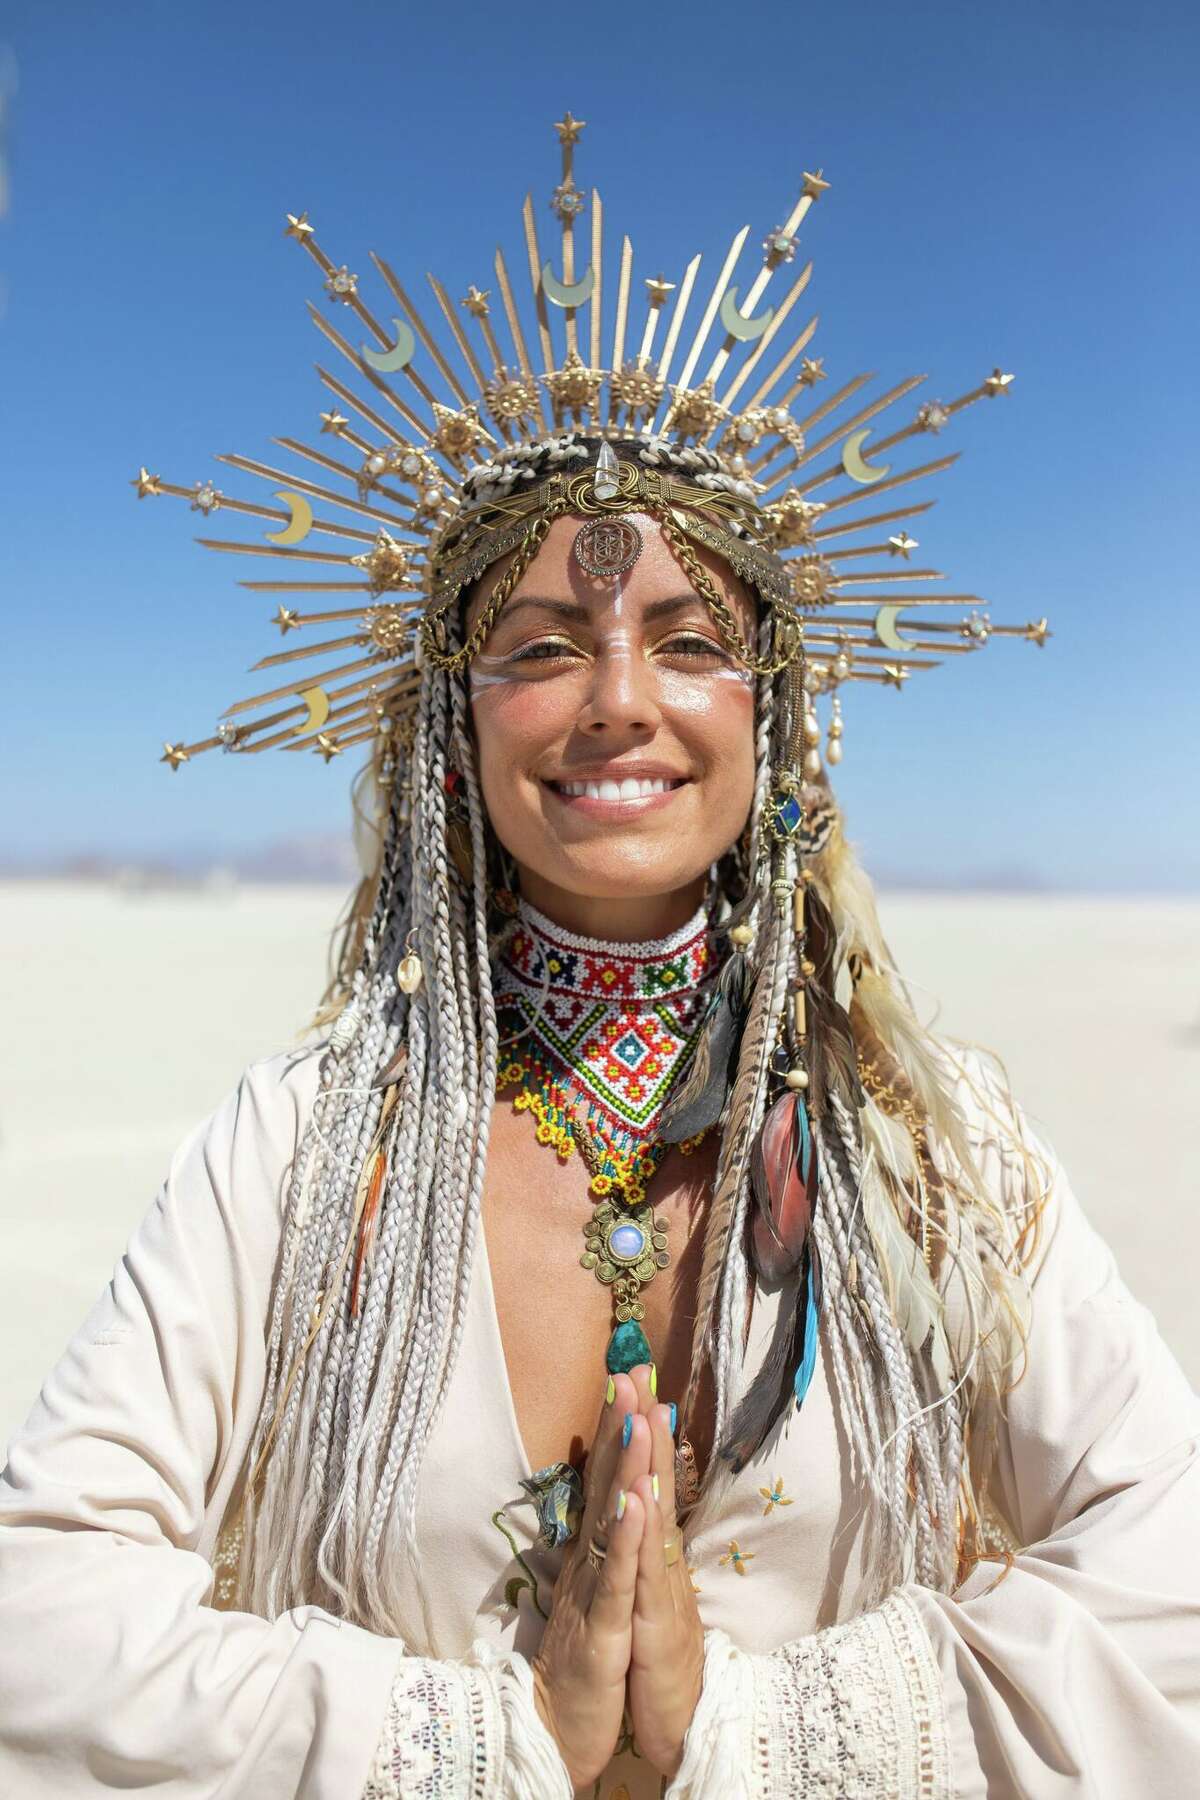 Gina Alexandra Galvez at Burning Man 2022 in the Black Rock Desert of Gerlach, Nevada.